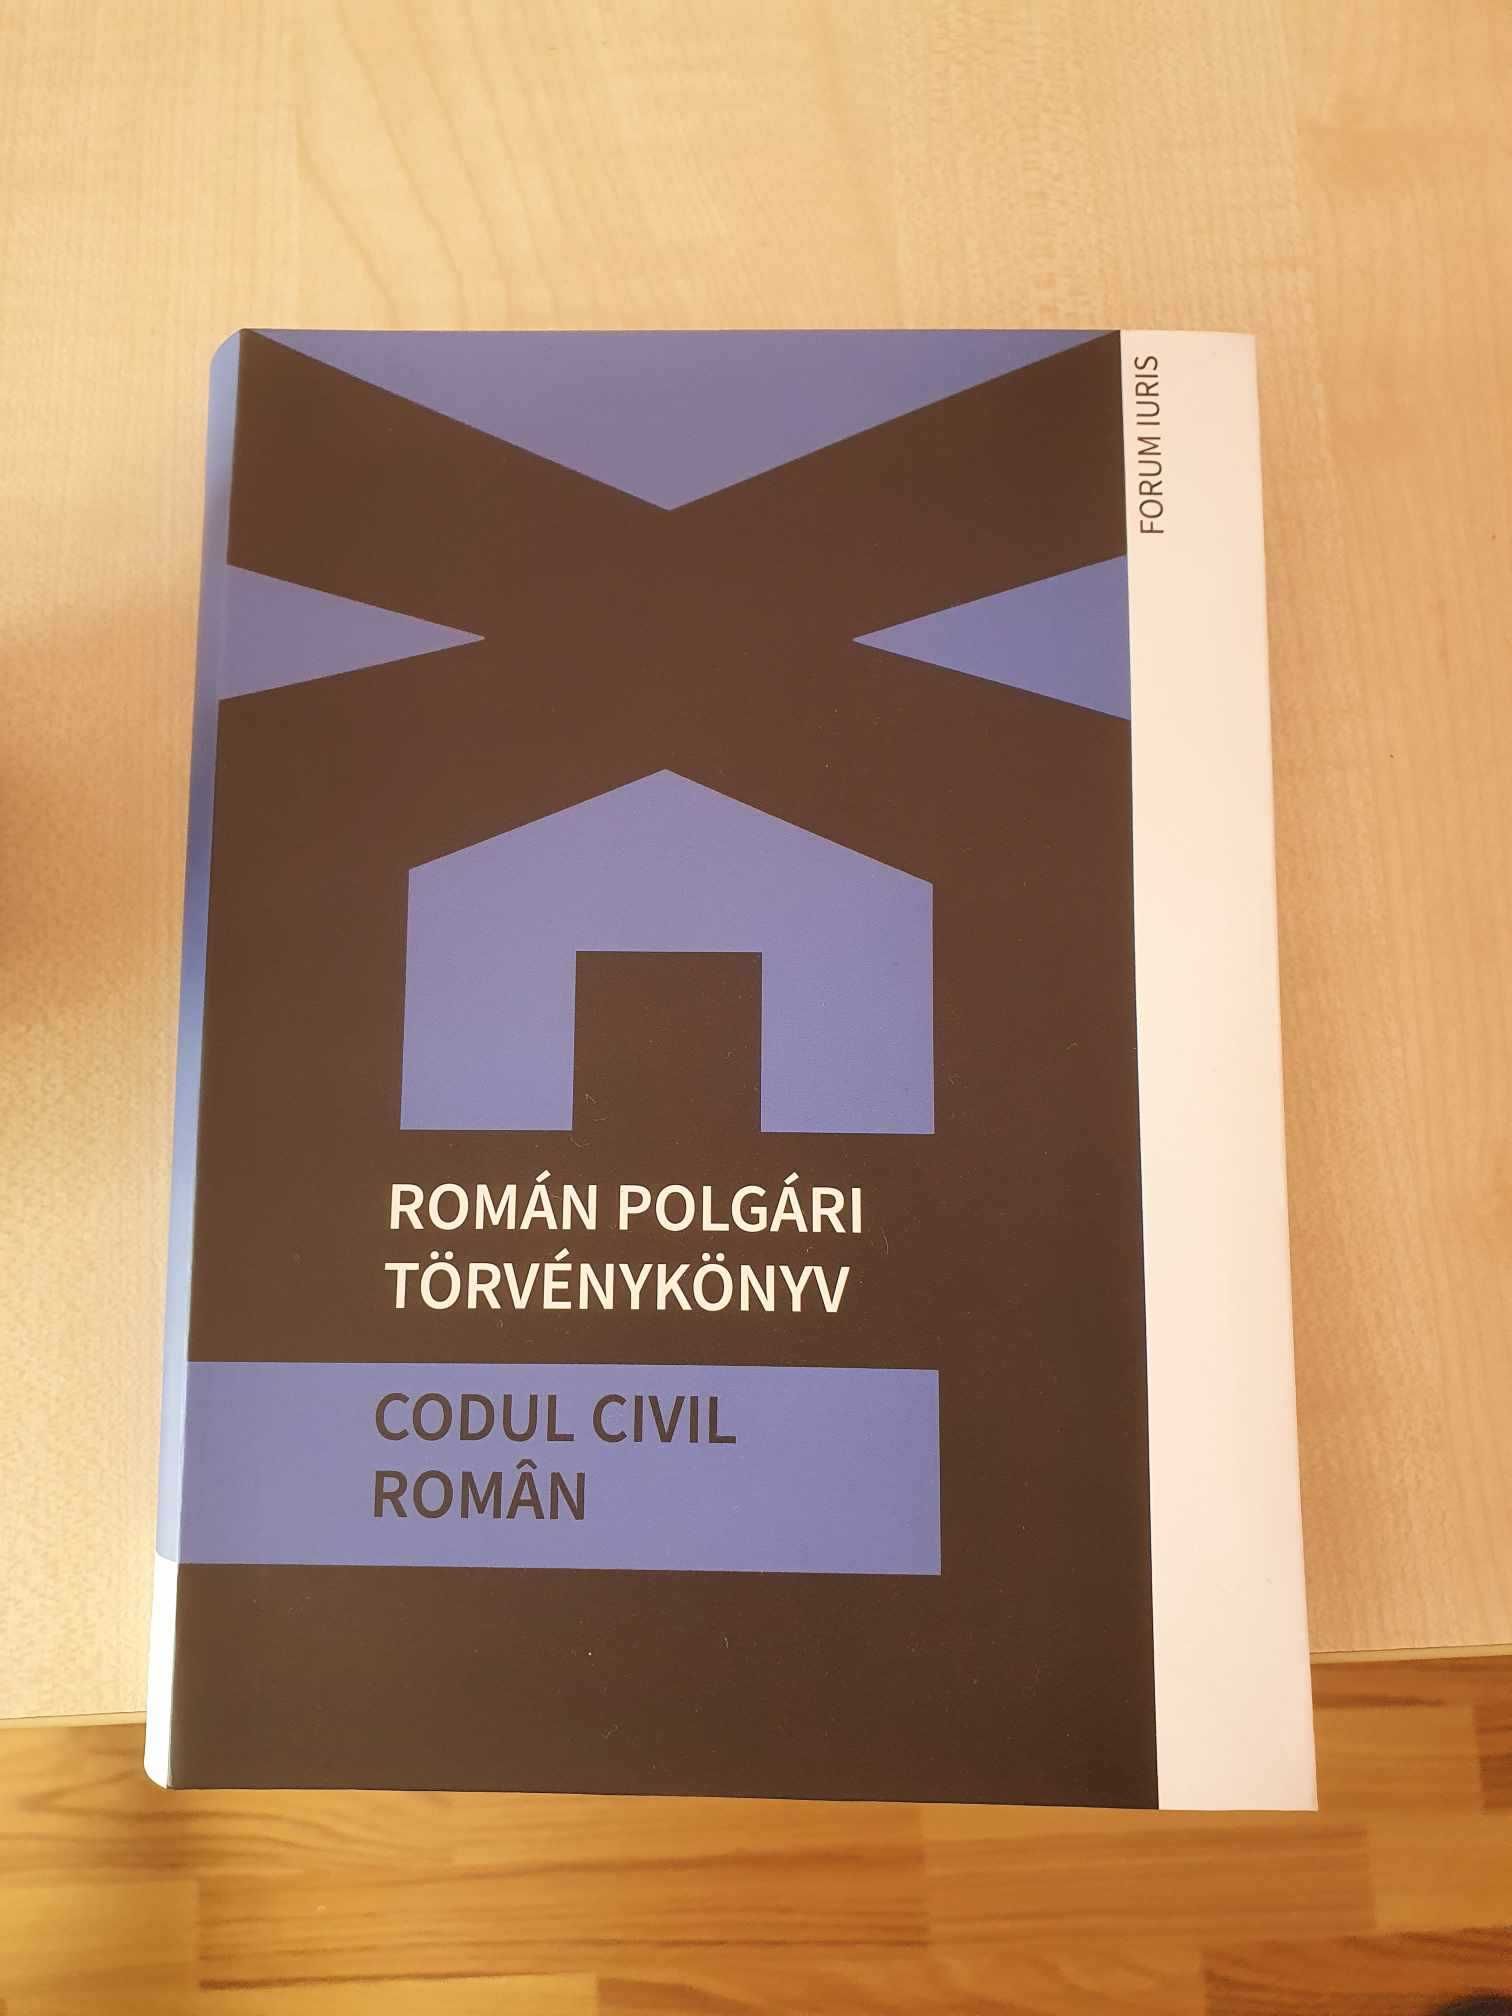 Cod civil 2023 in doua limbi, romana-maghiara